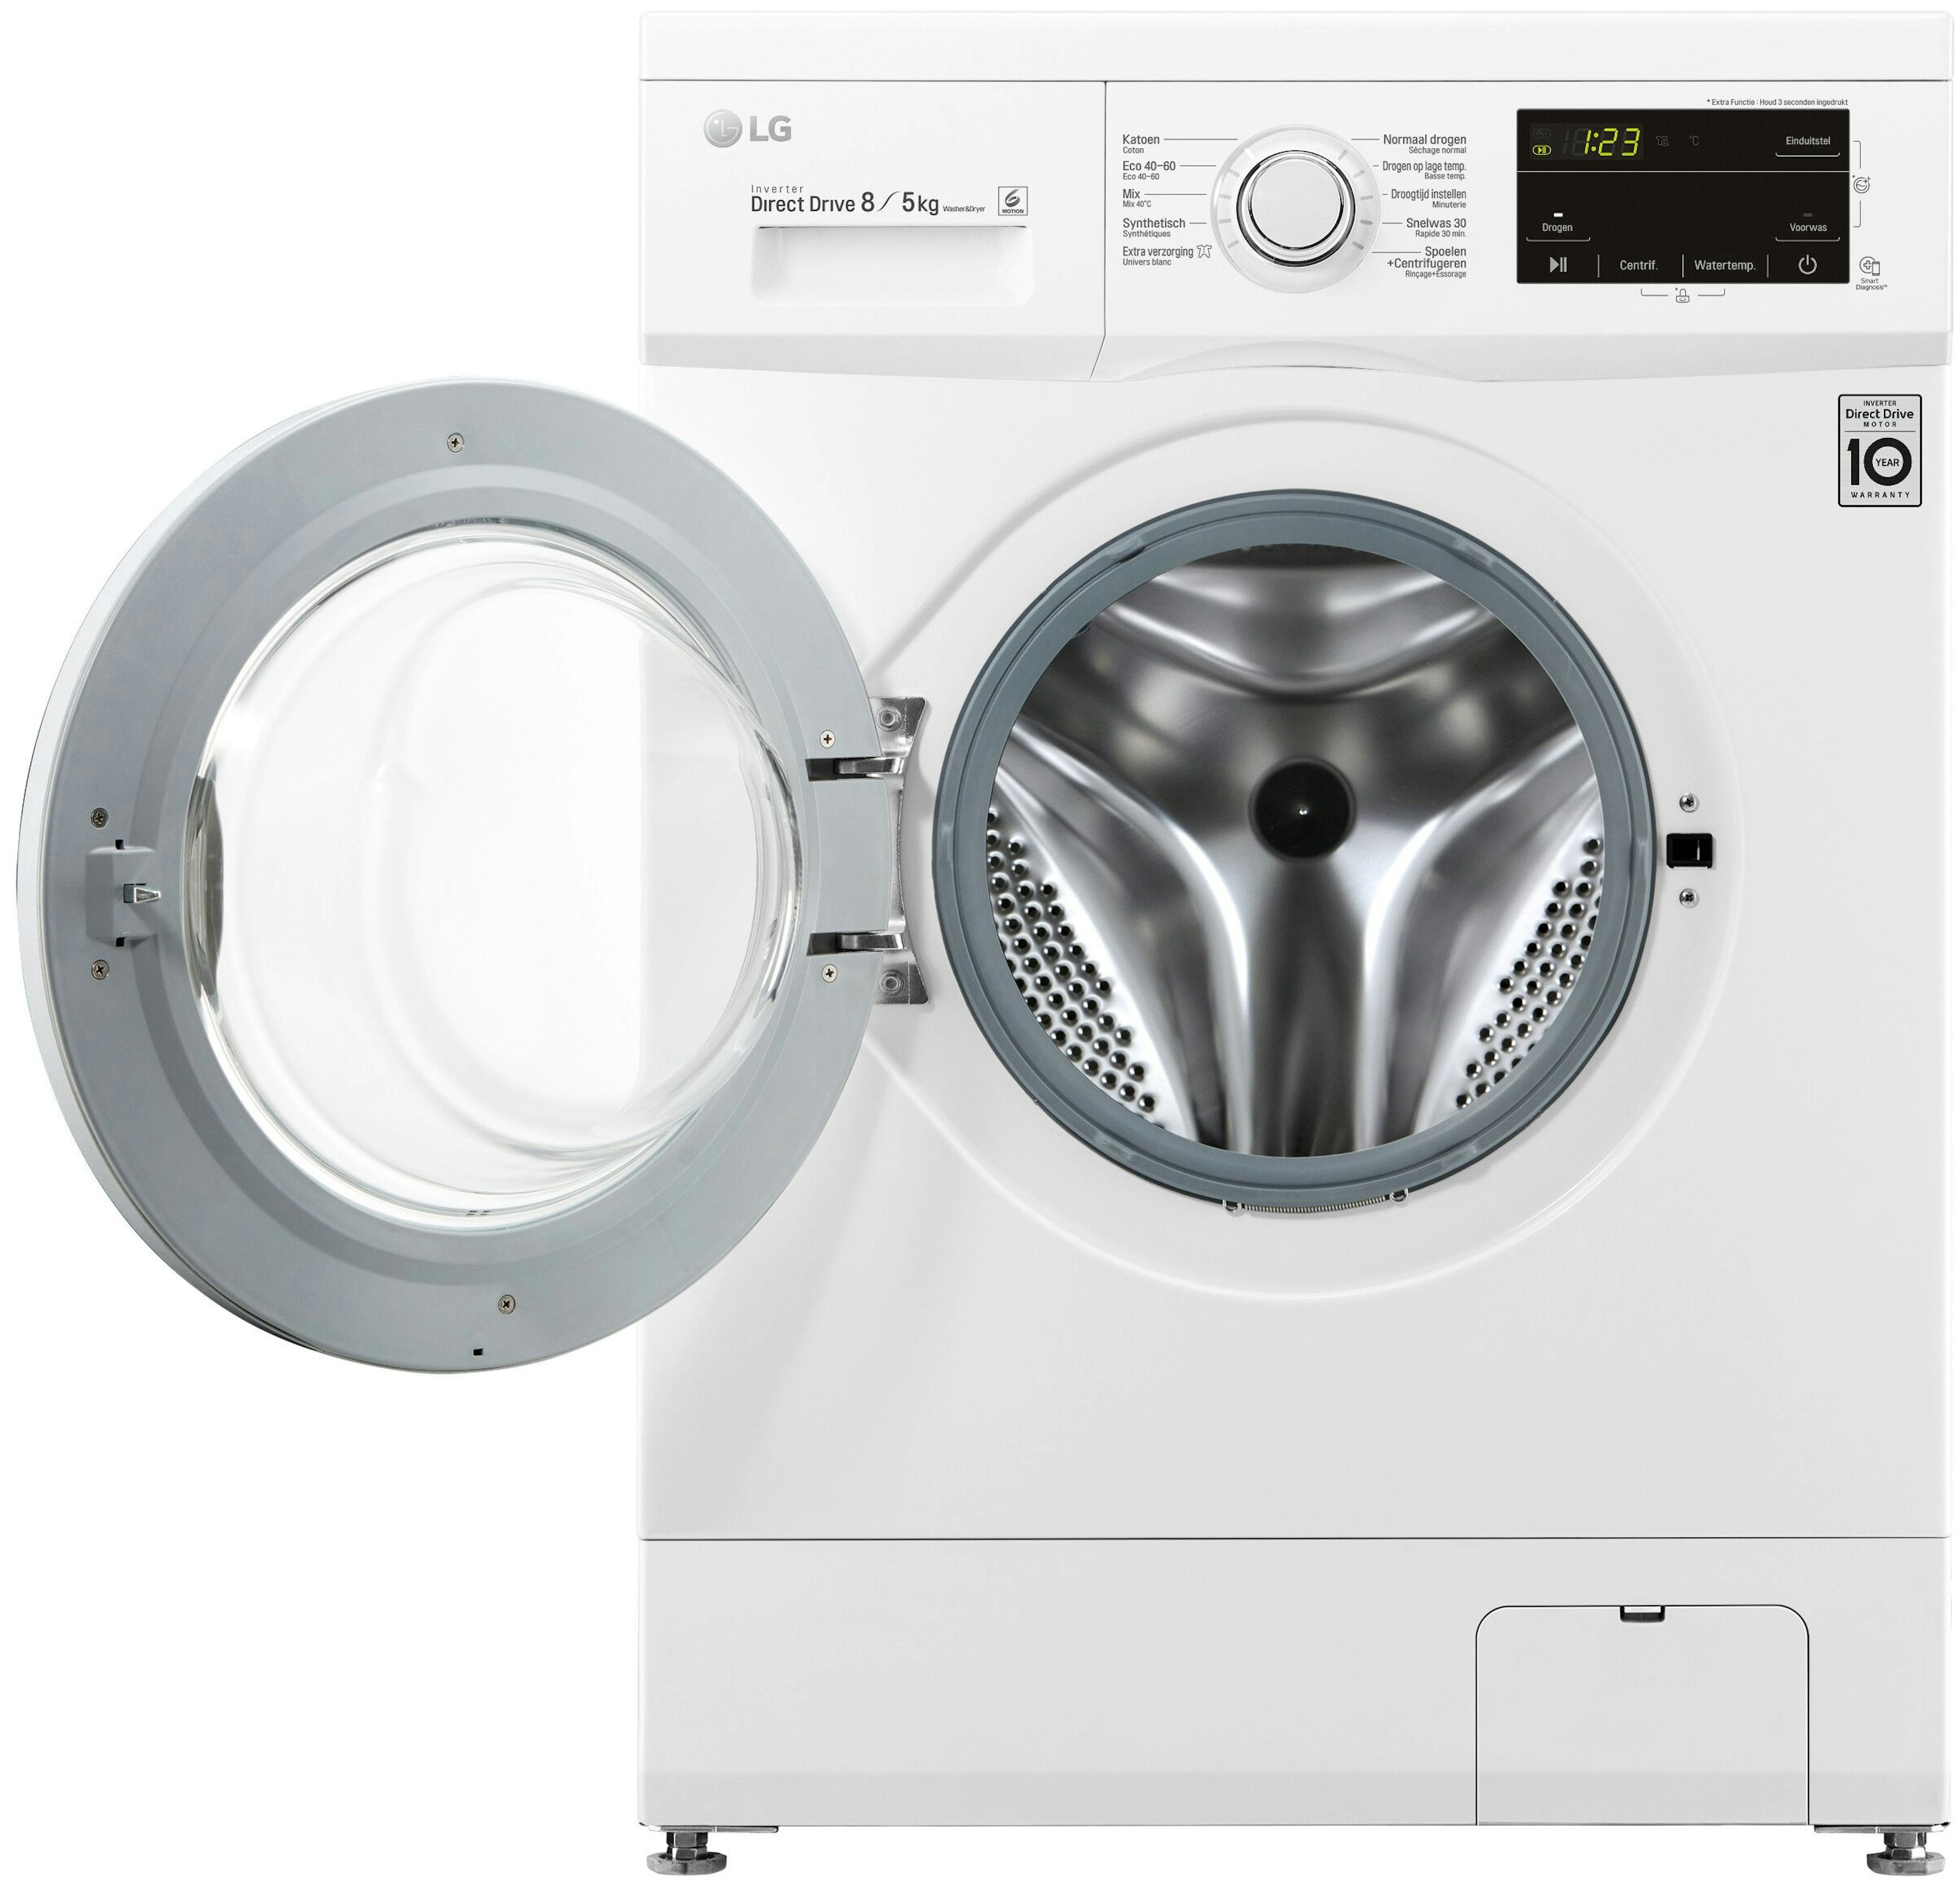 LG wasmachine  GD3M108N3 afbeelding 4